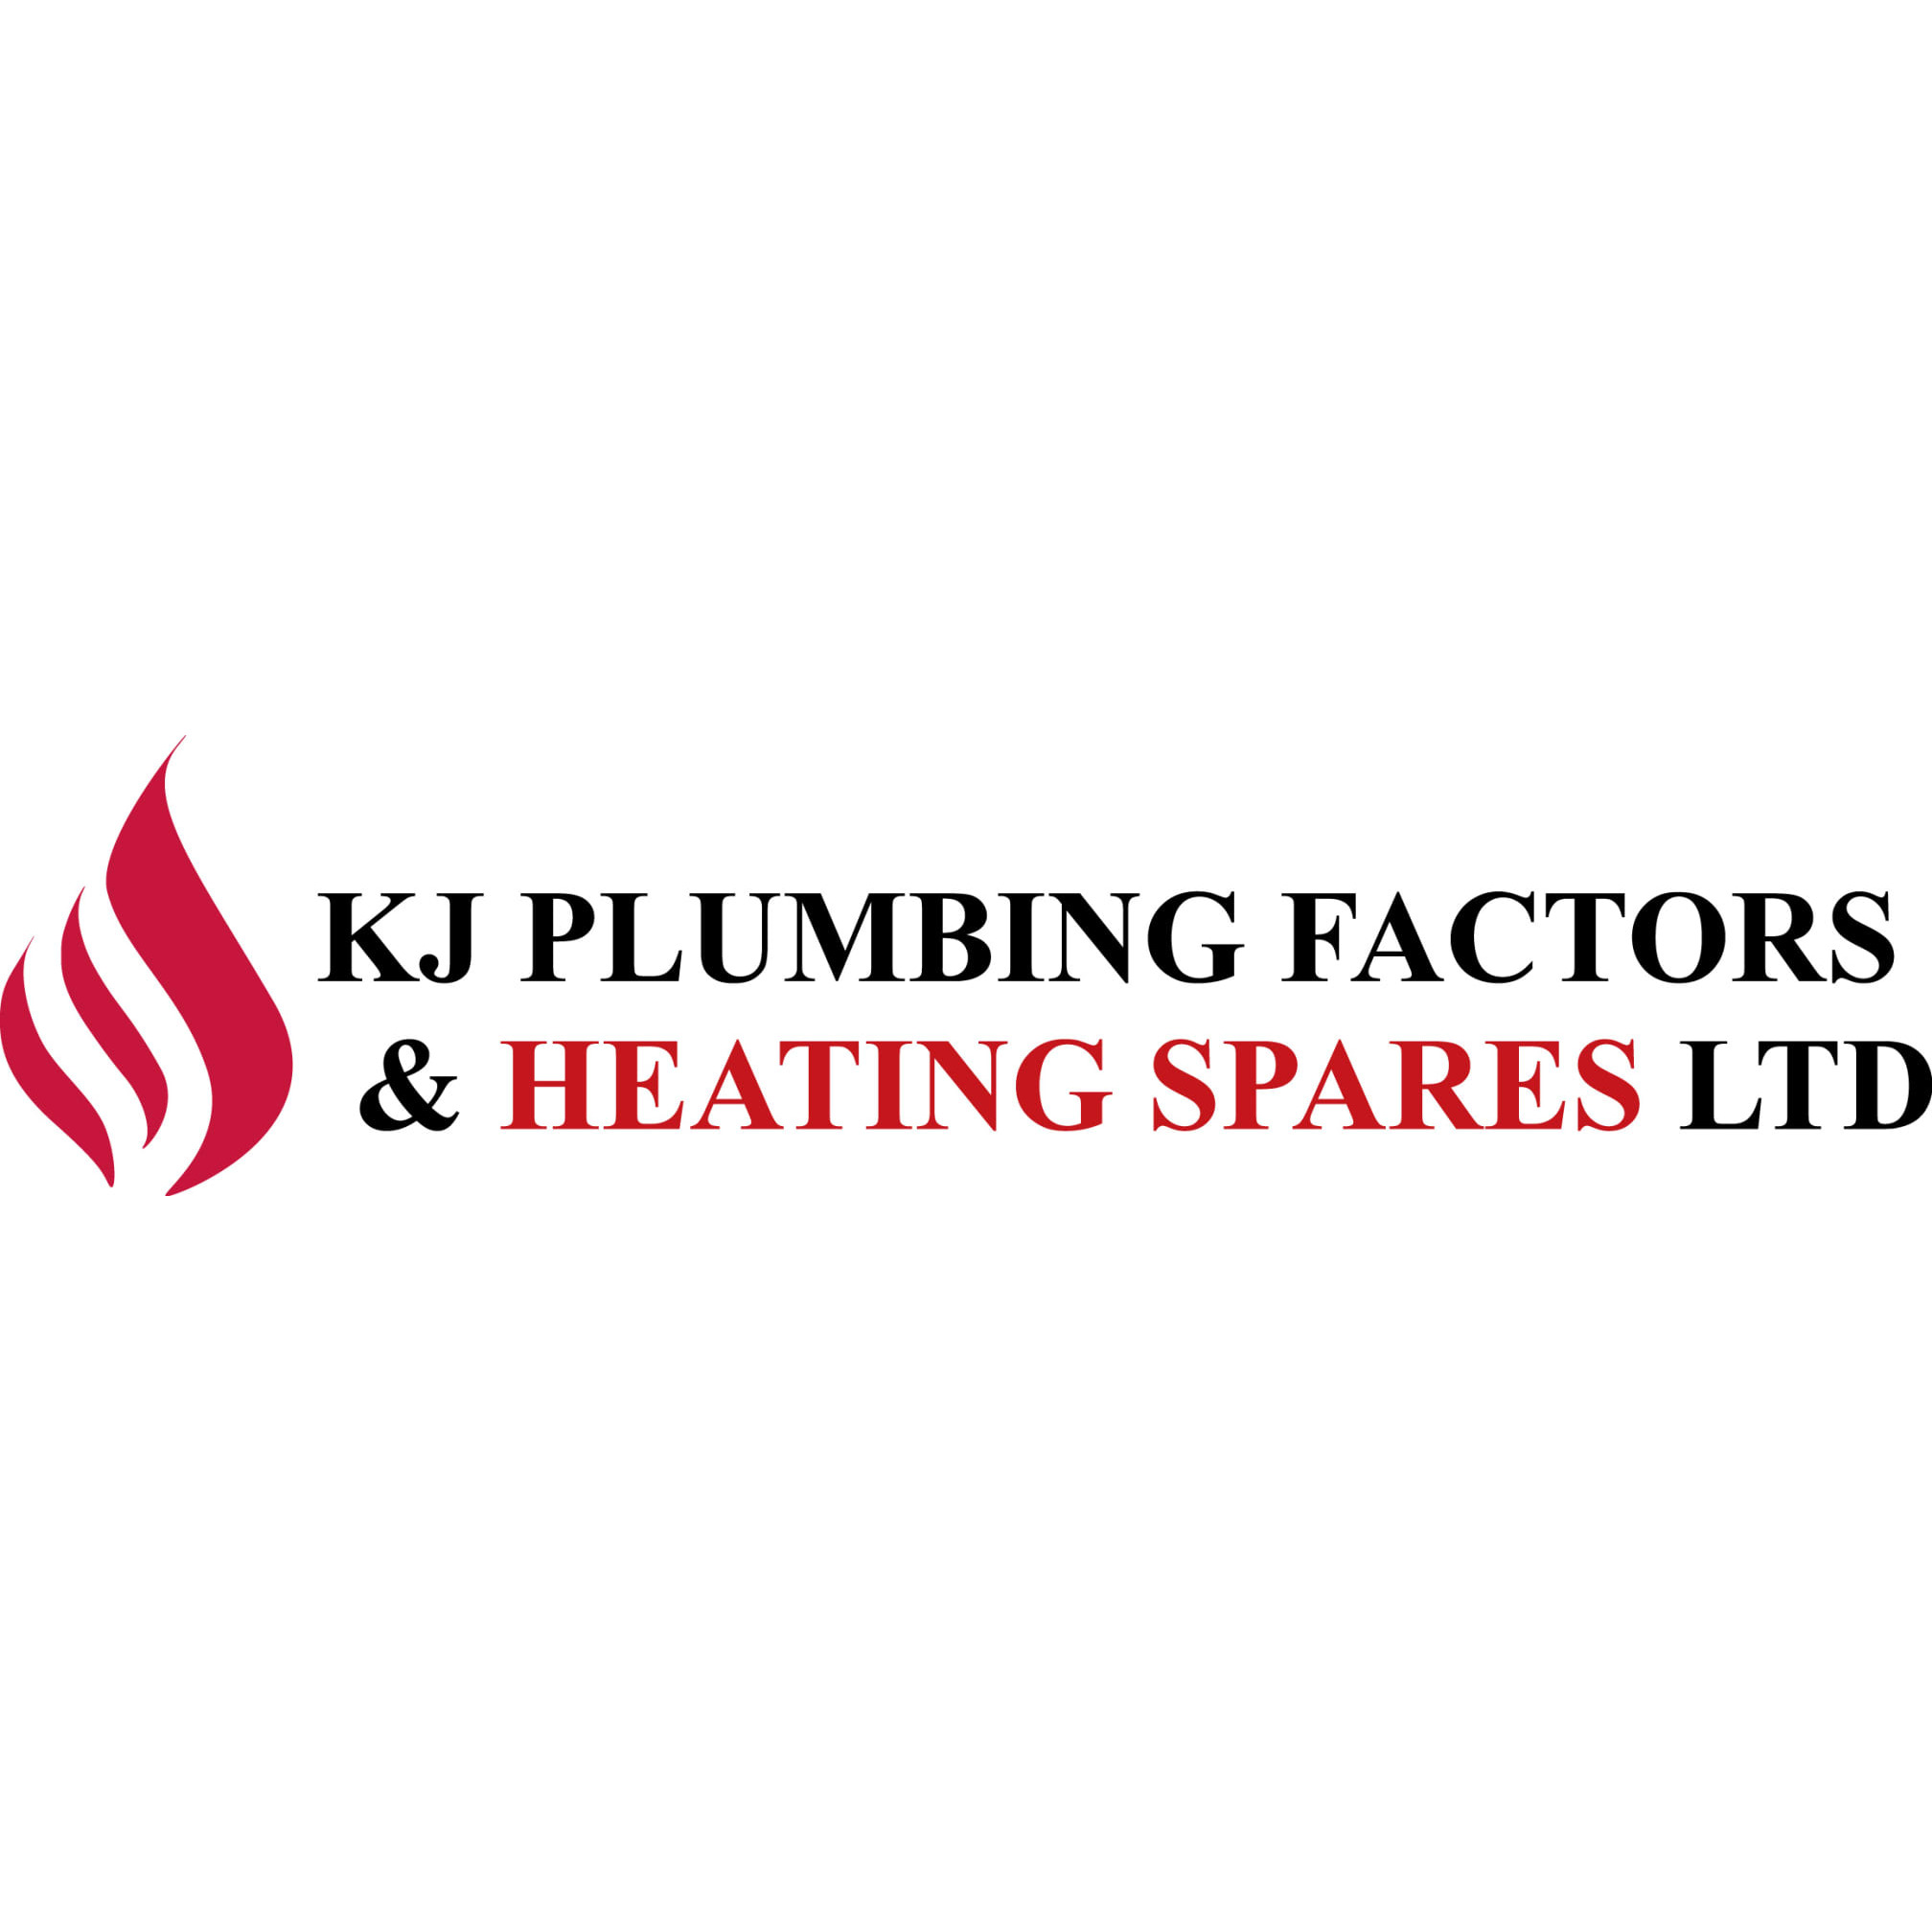 LOGO K.J Plumbing Factors & Heating Spares Ltd Bury 01617 975222